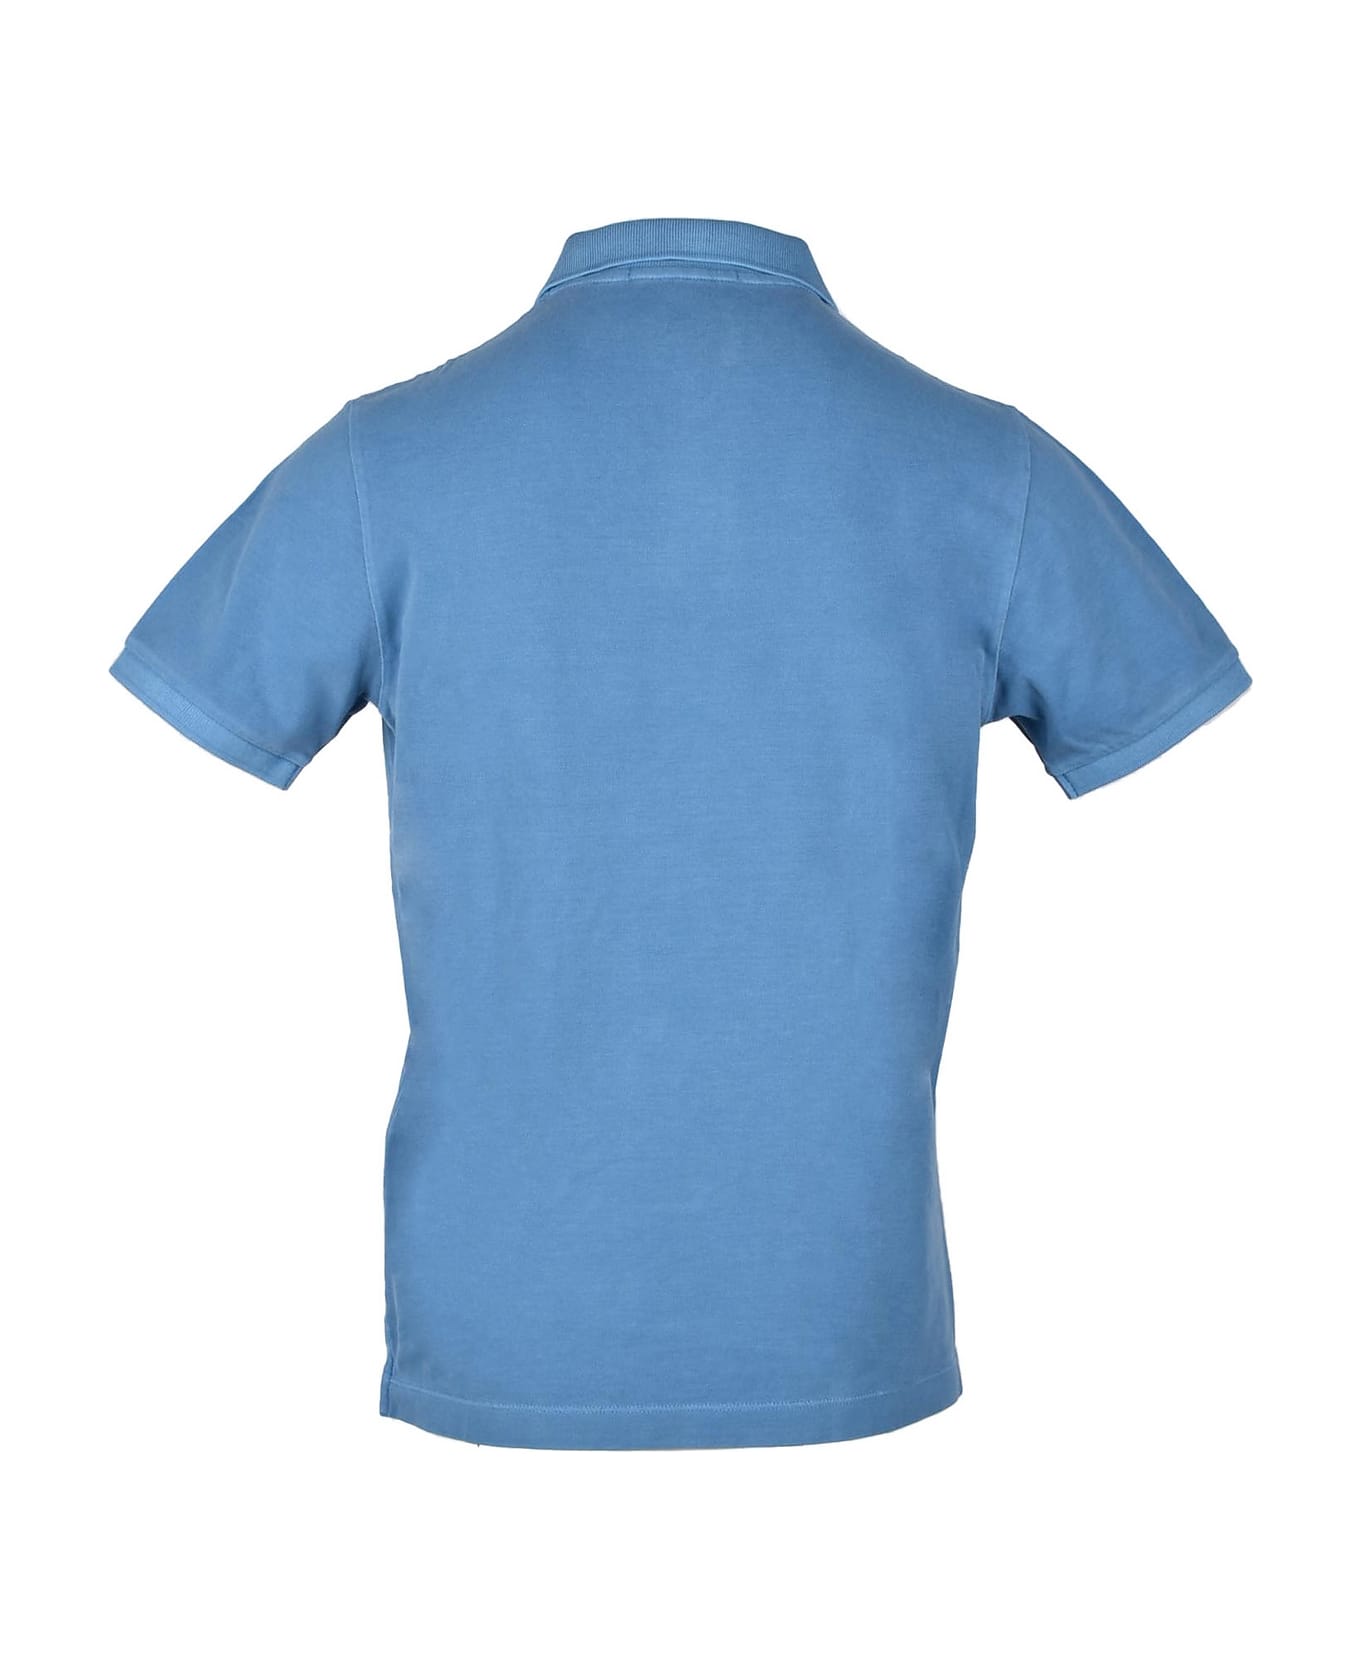 Stone Island Men's Light Blue Shirt - Light Blue